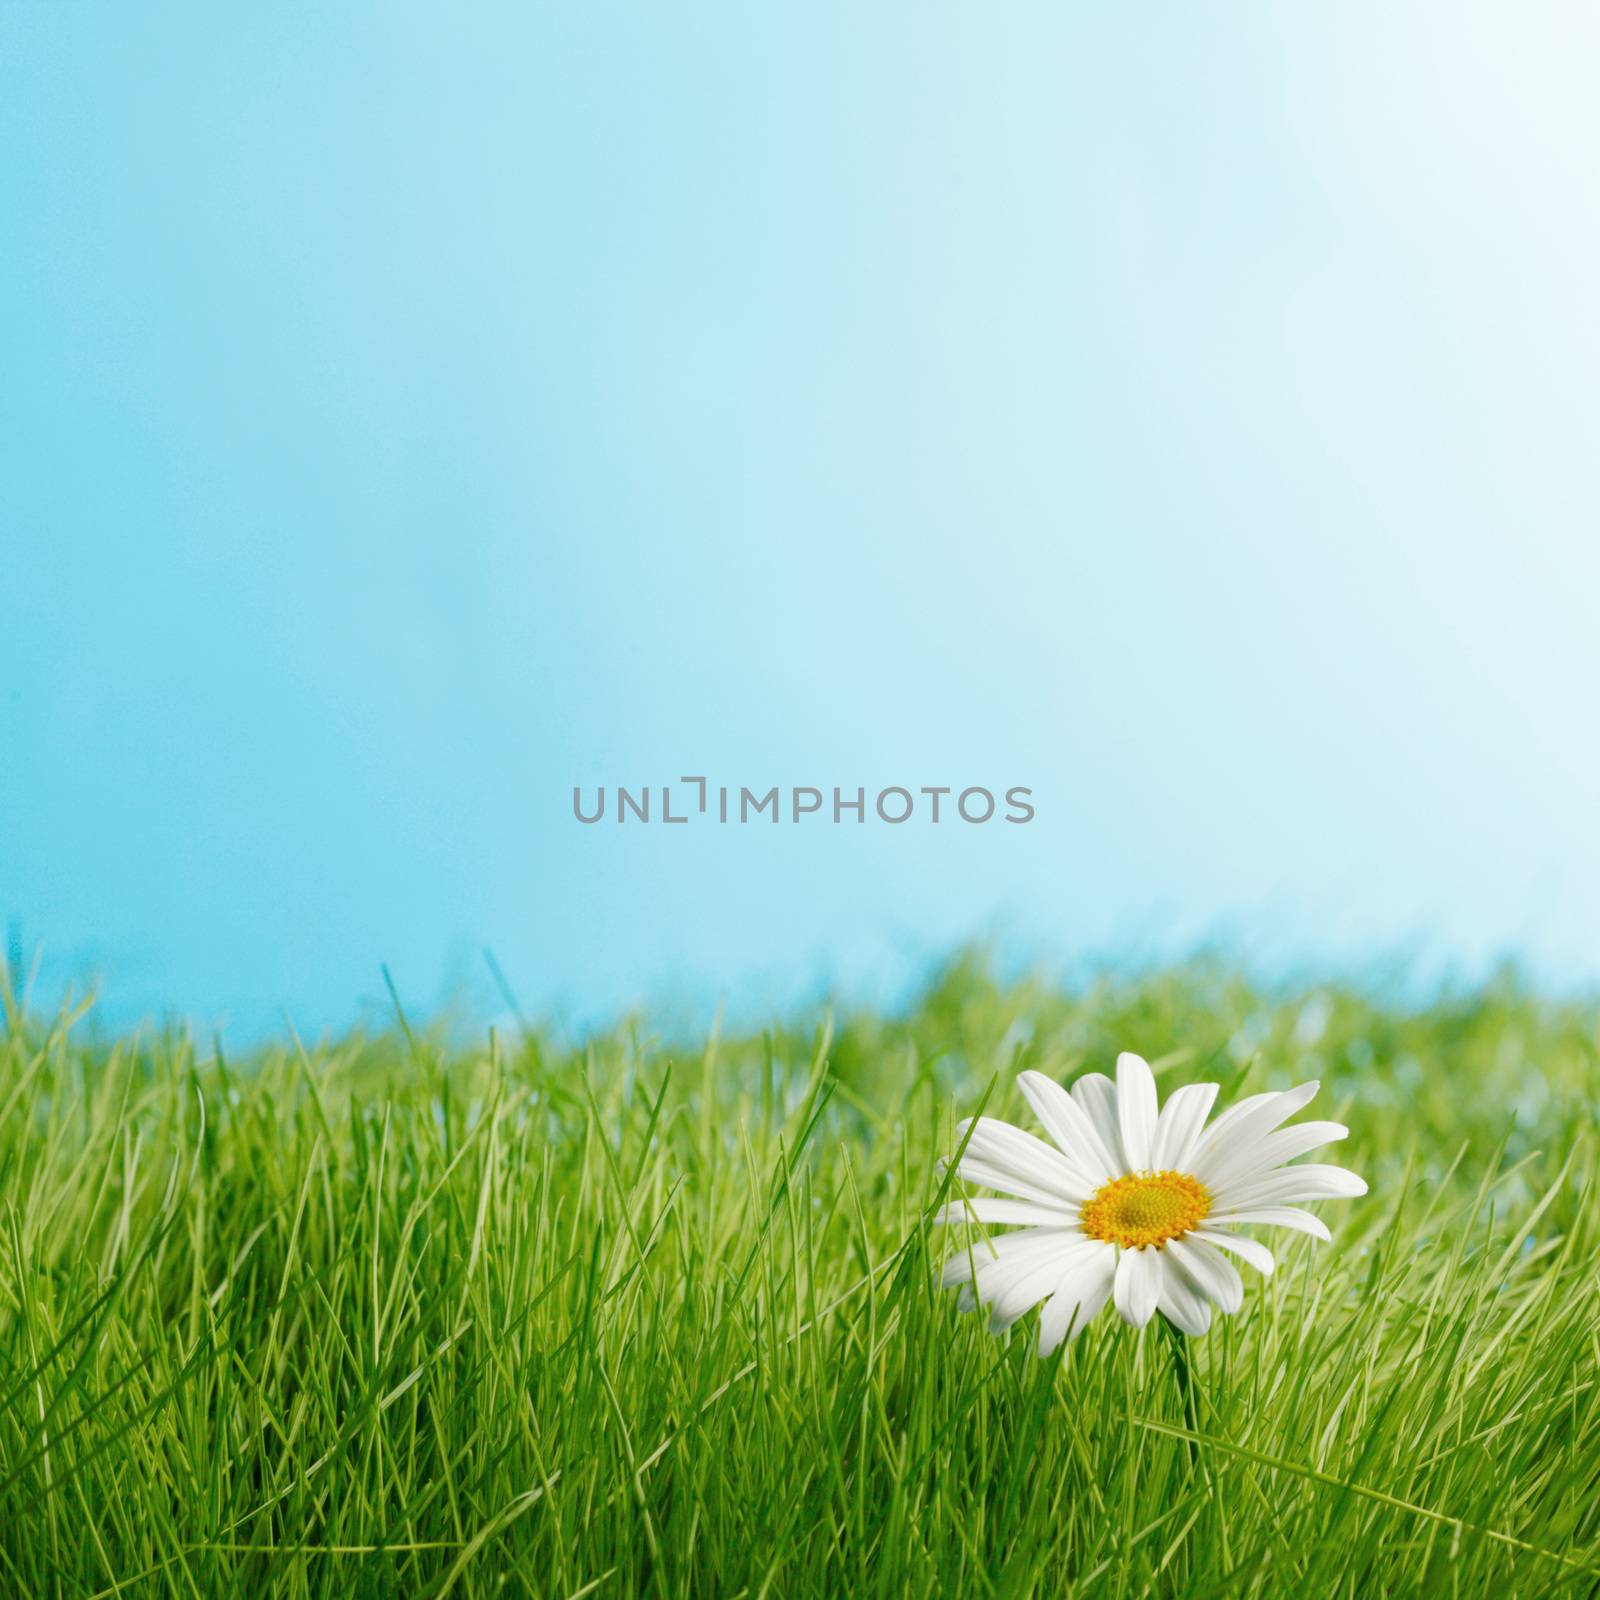 Daisy flower in fresh green grass on blue background